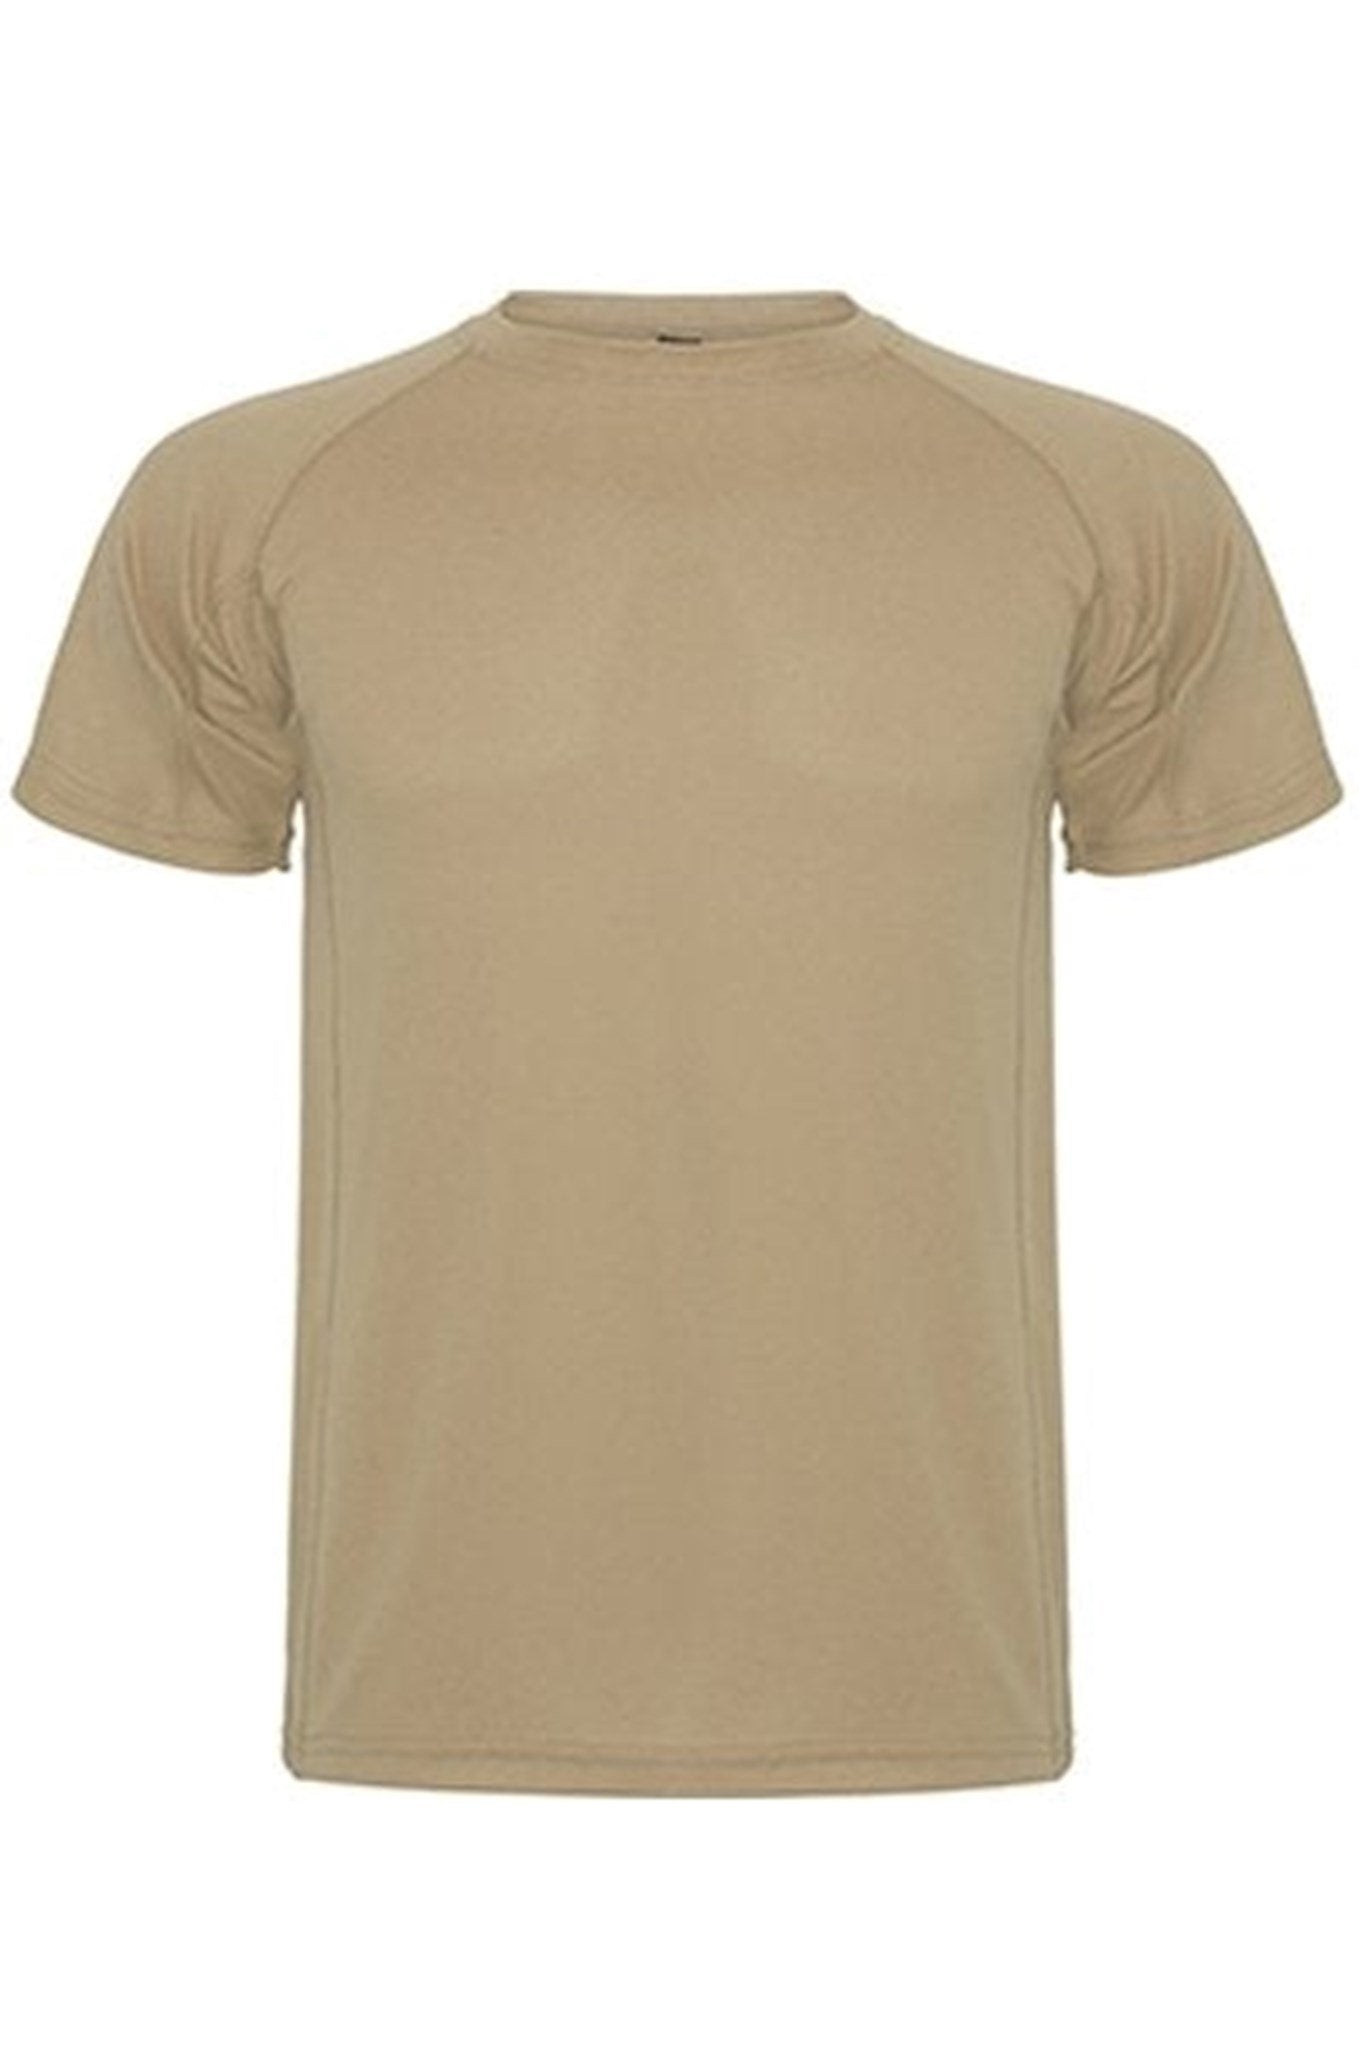 Trænings T-shirt - Khaki - TeeShoppen - Sand/Beige